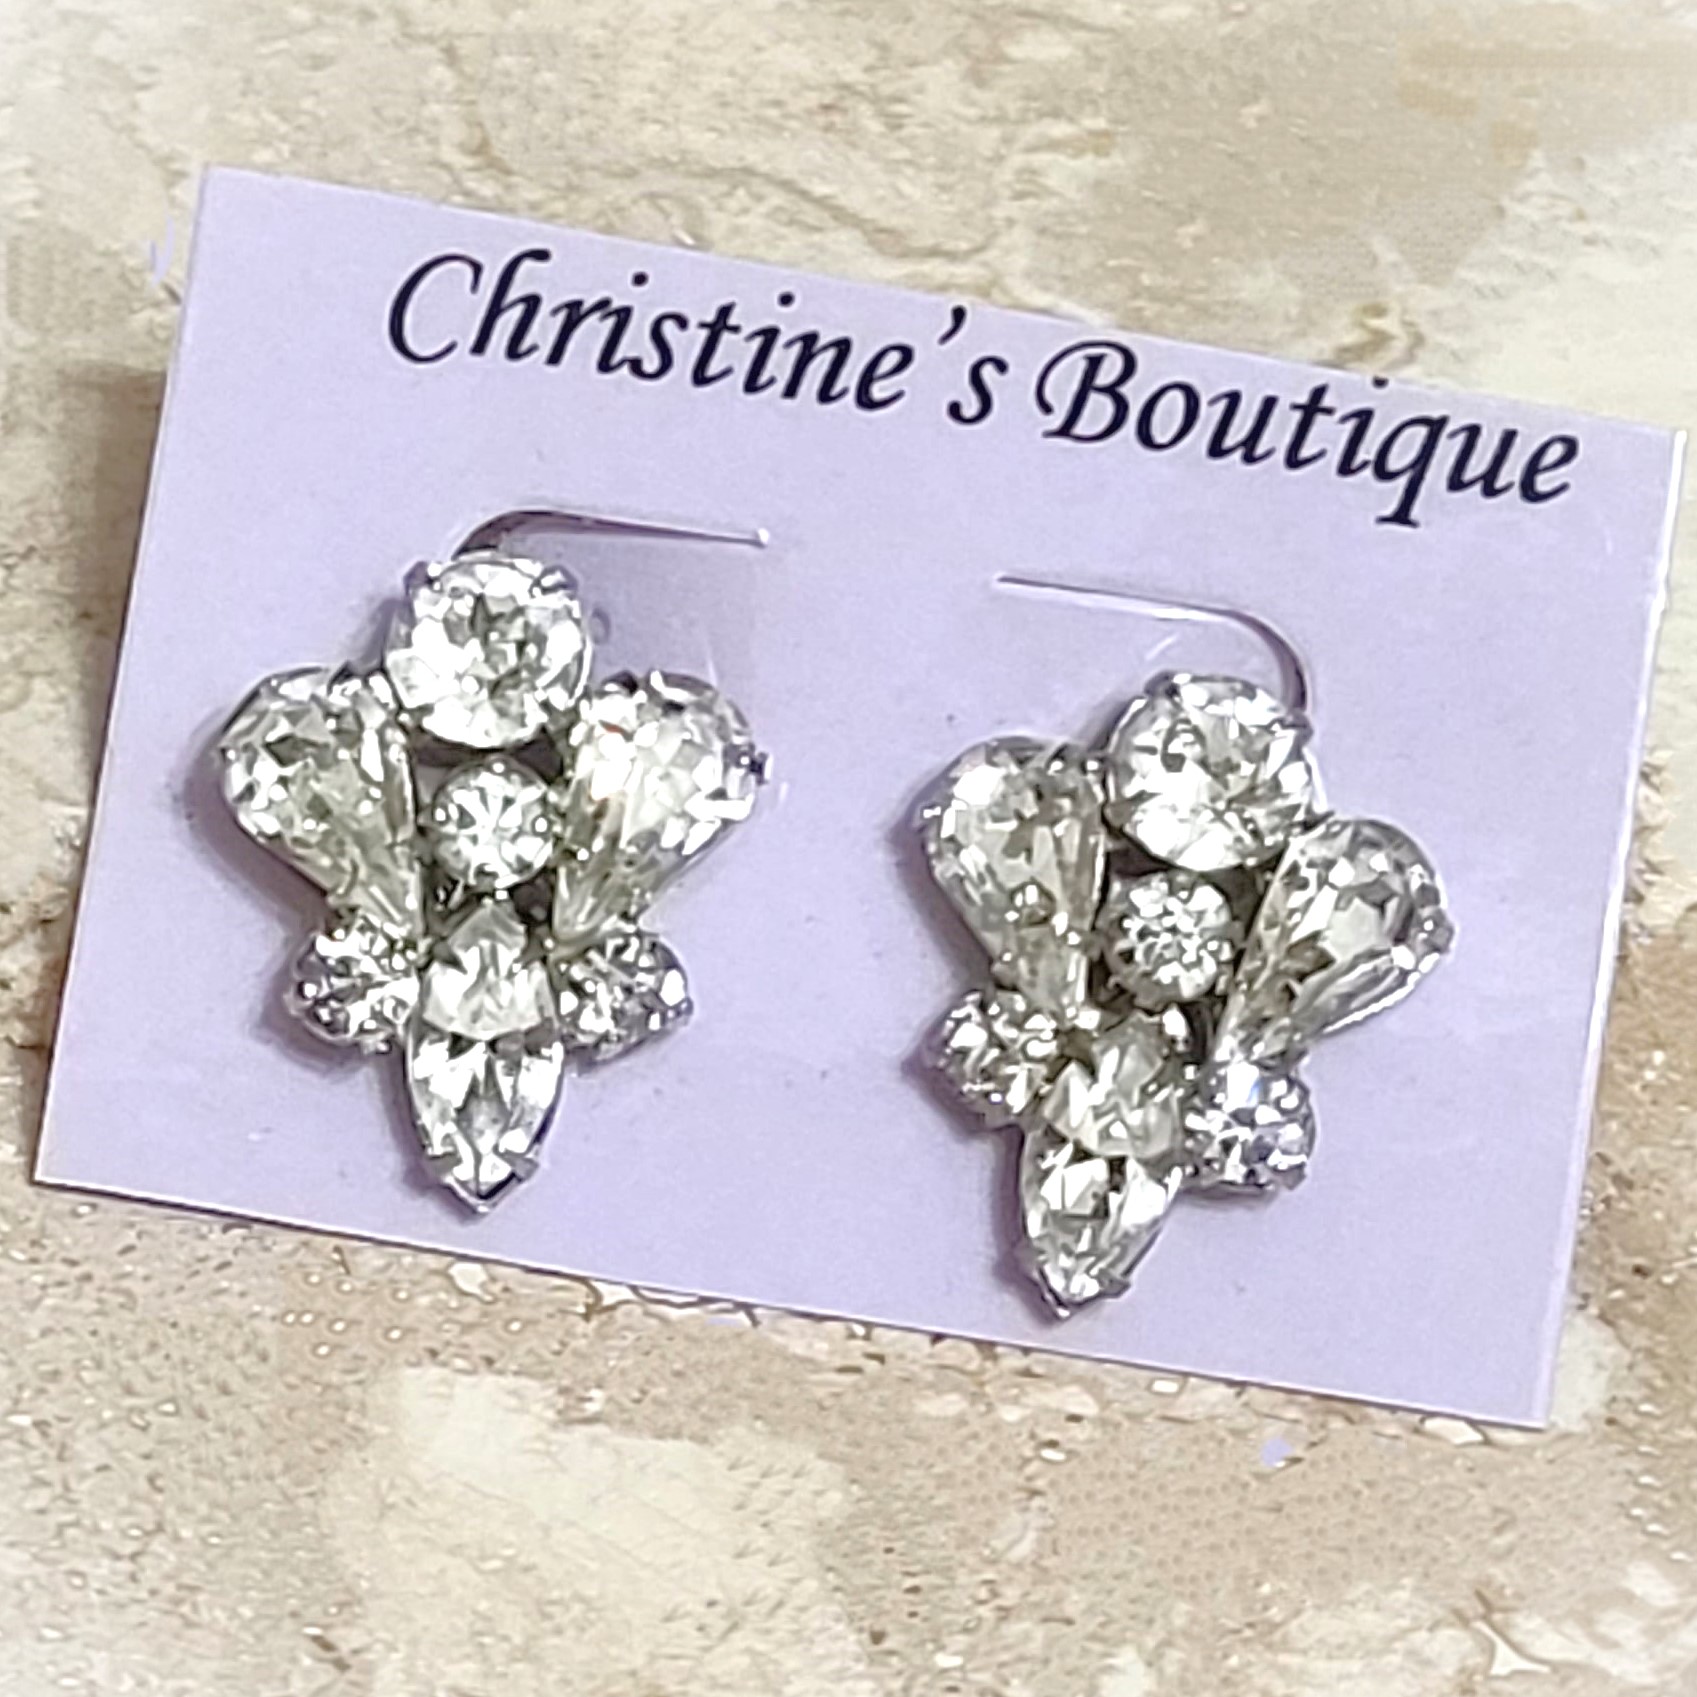 Rhinestone earrings, vintage screw back earrings, tear drop rhinestons - Click Image to Close